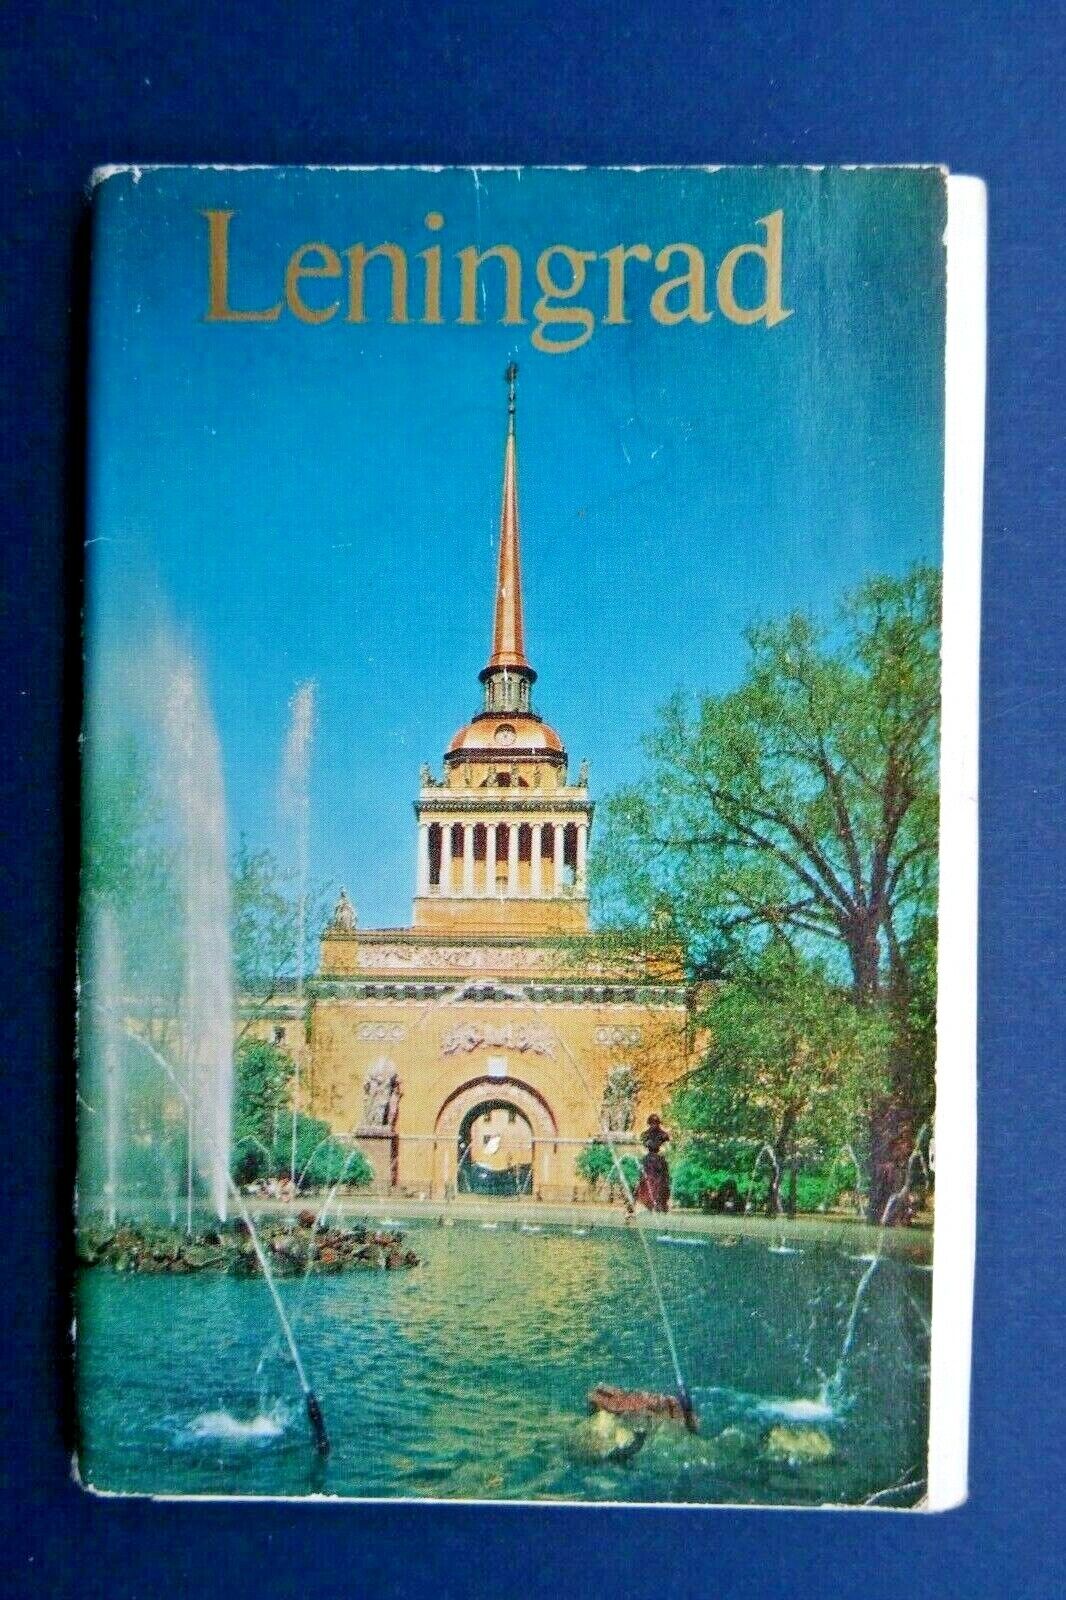 Leningrad. 1975 Vintage Photo Postcards Sets of 16 pcs